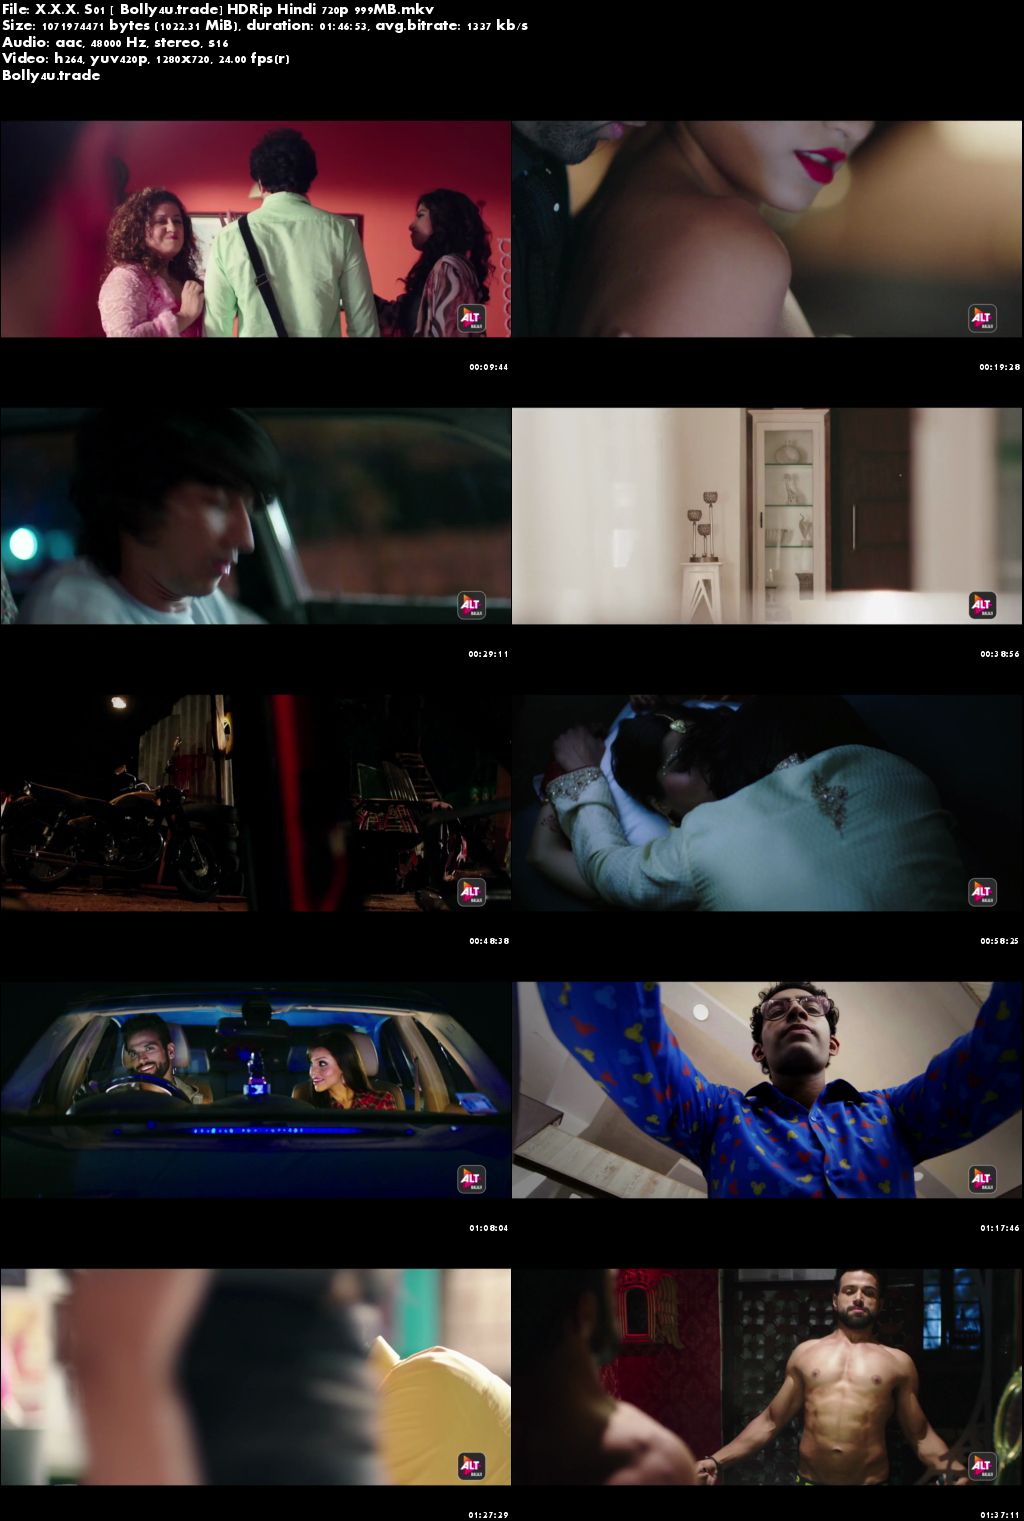 [18+] XXX S01 HDRip 999MB Uncensored Complete Season Hindi 720p Download